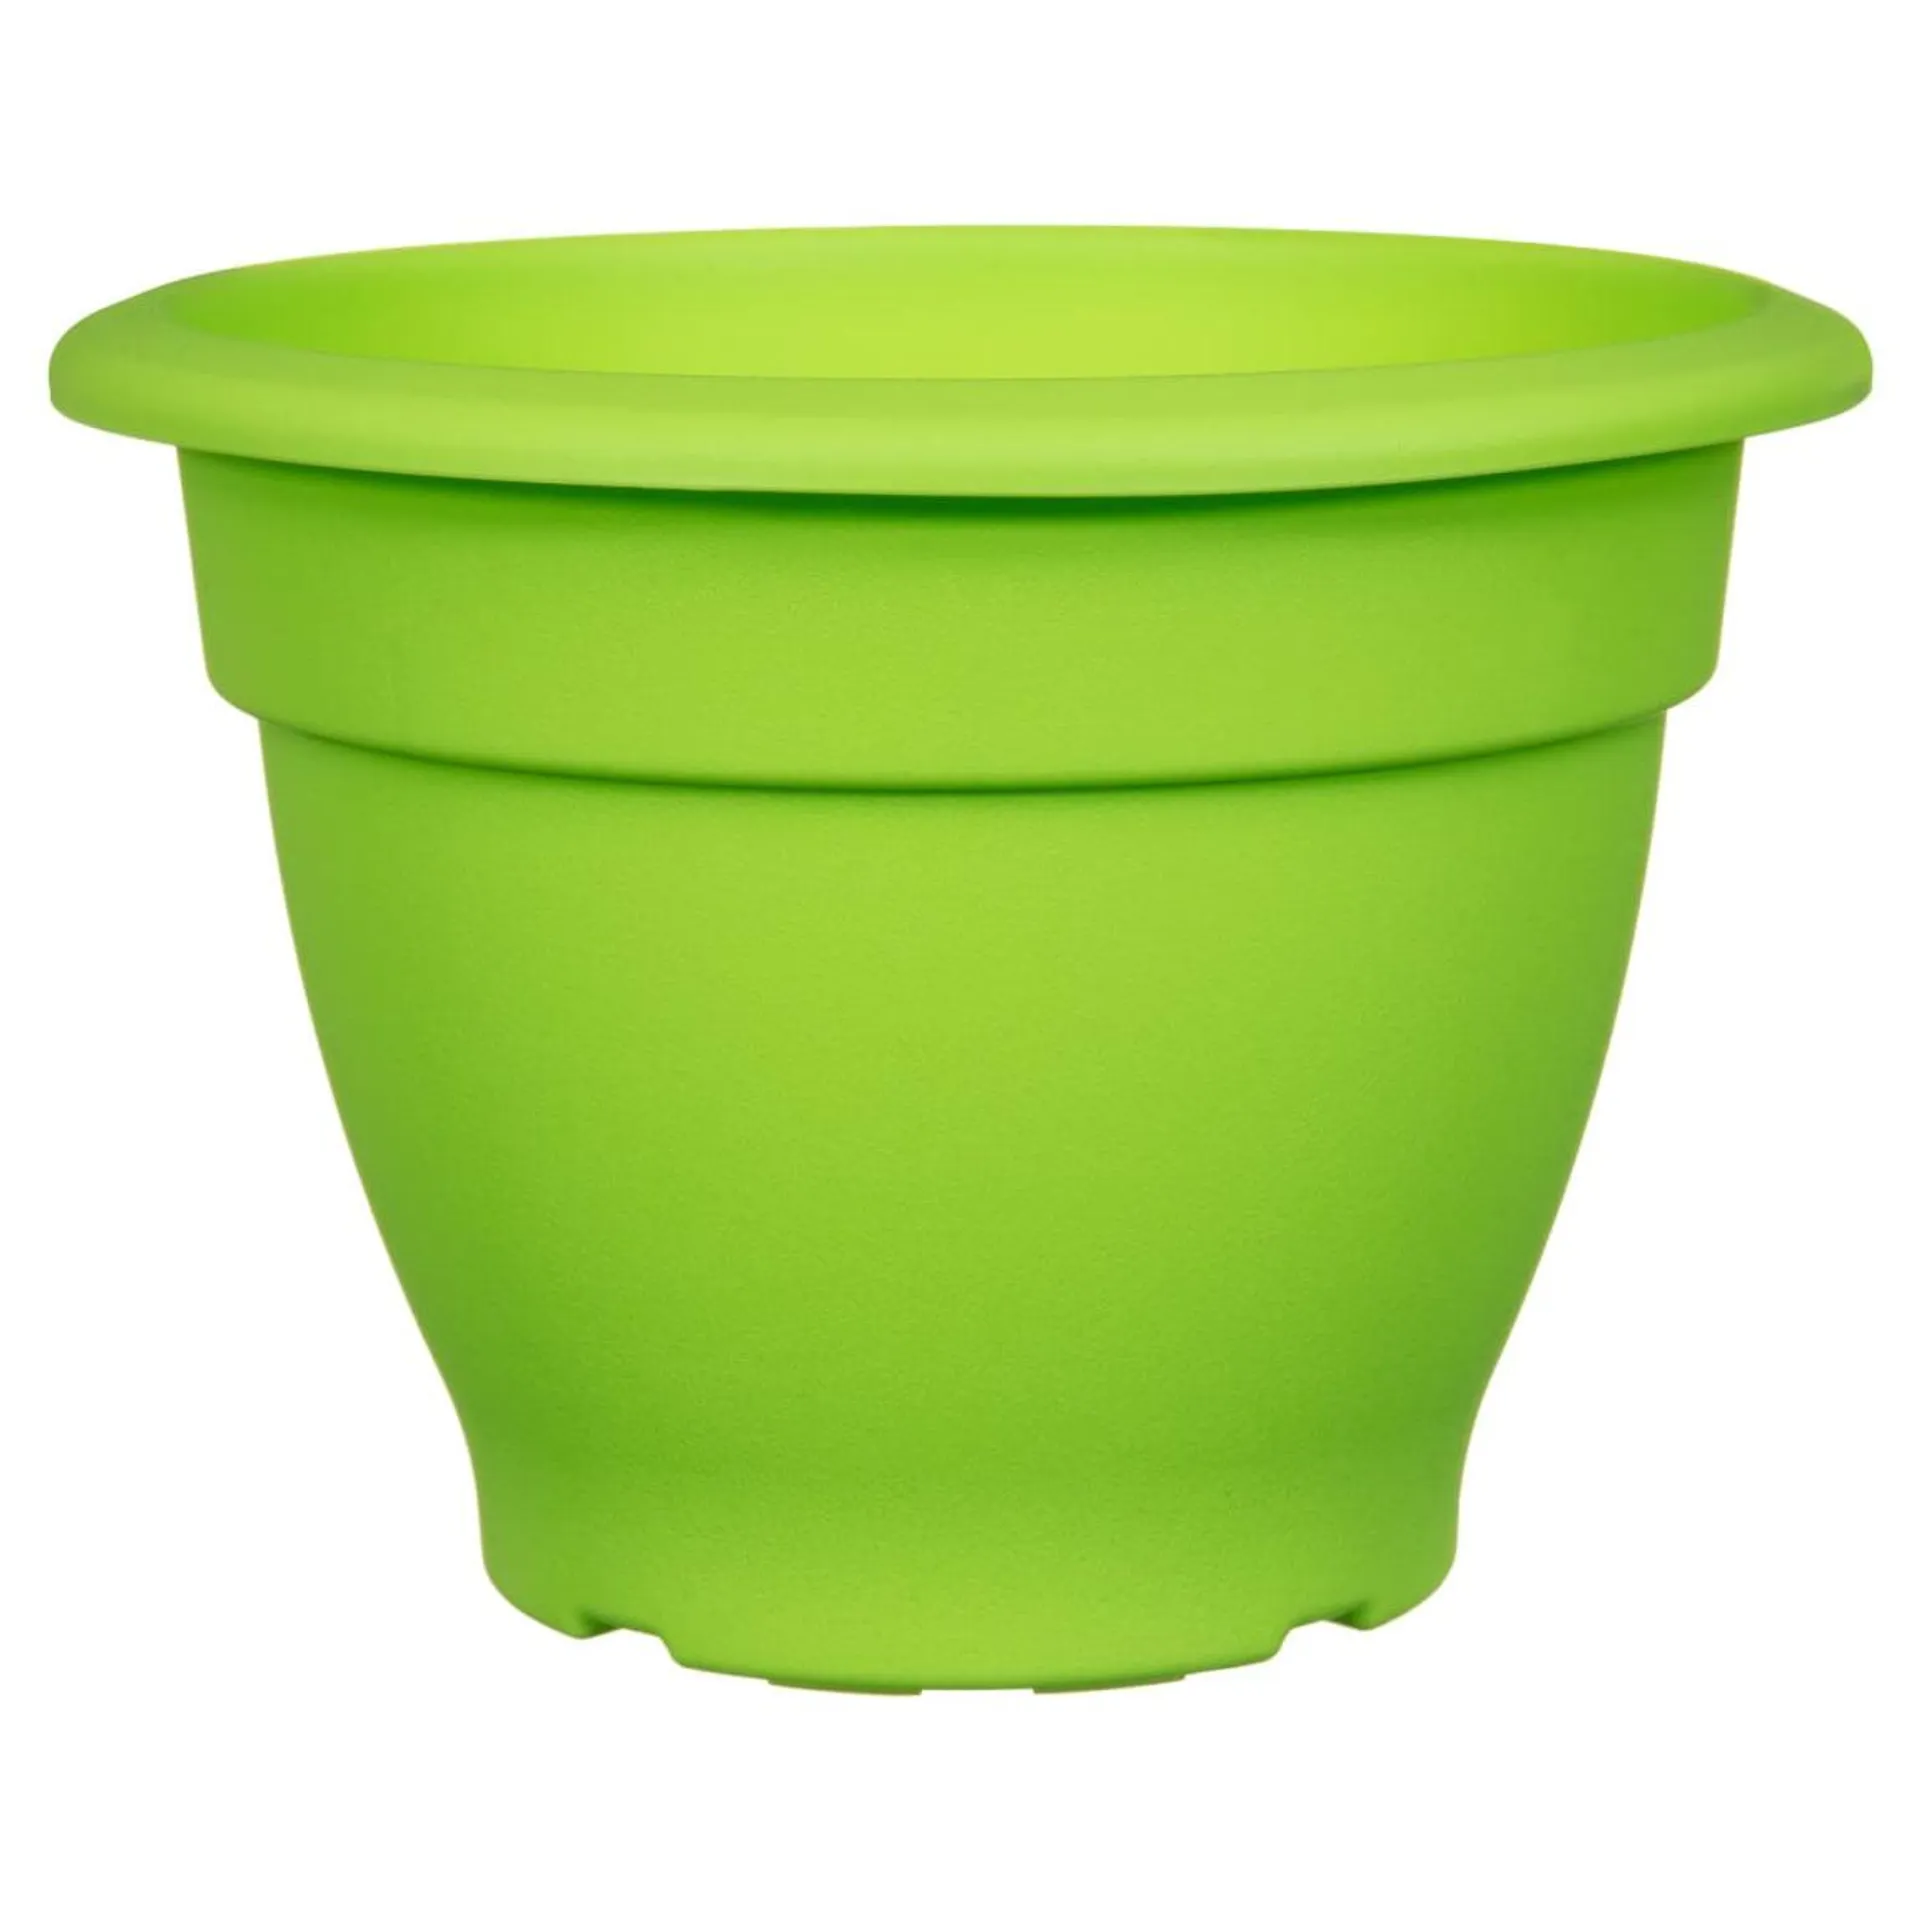 Bell Pot Round Planter 30cm - Green